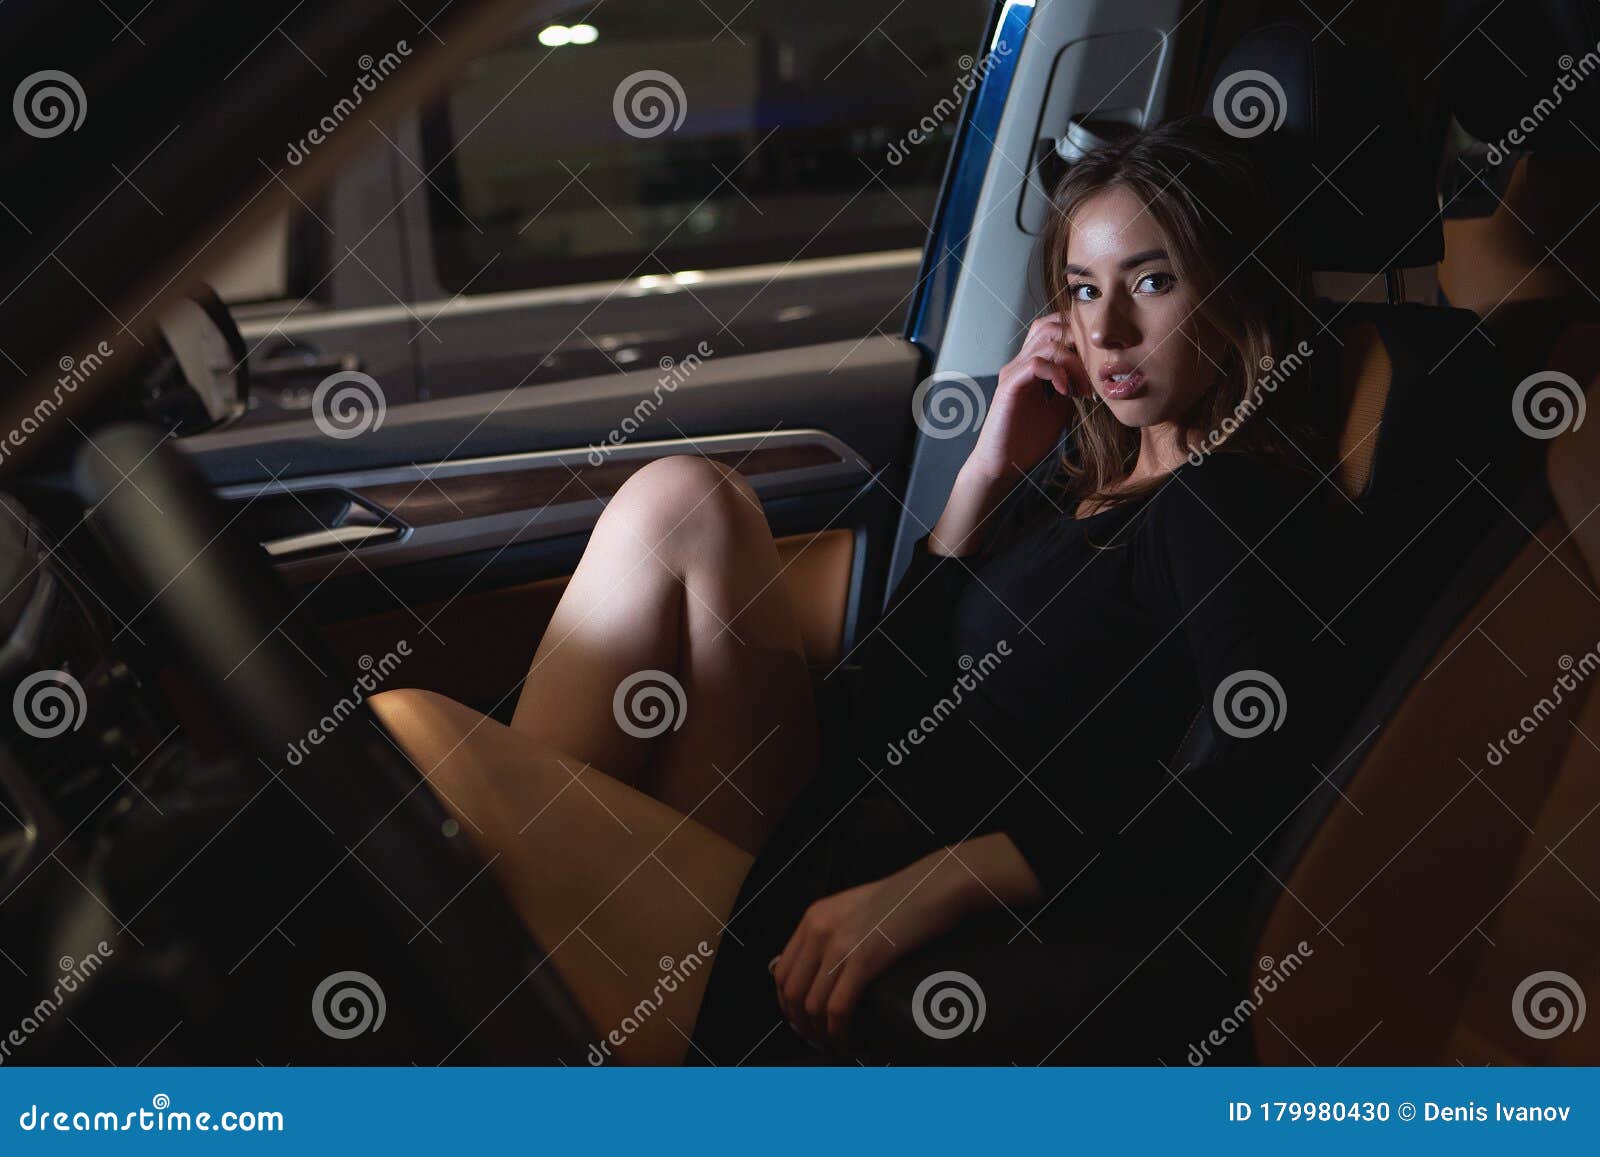 beautiful girl in the salon of a prestigious car